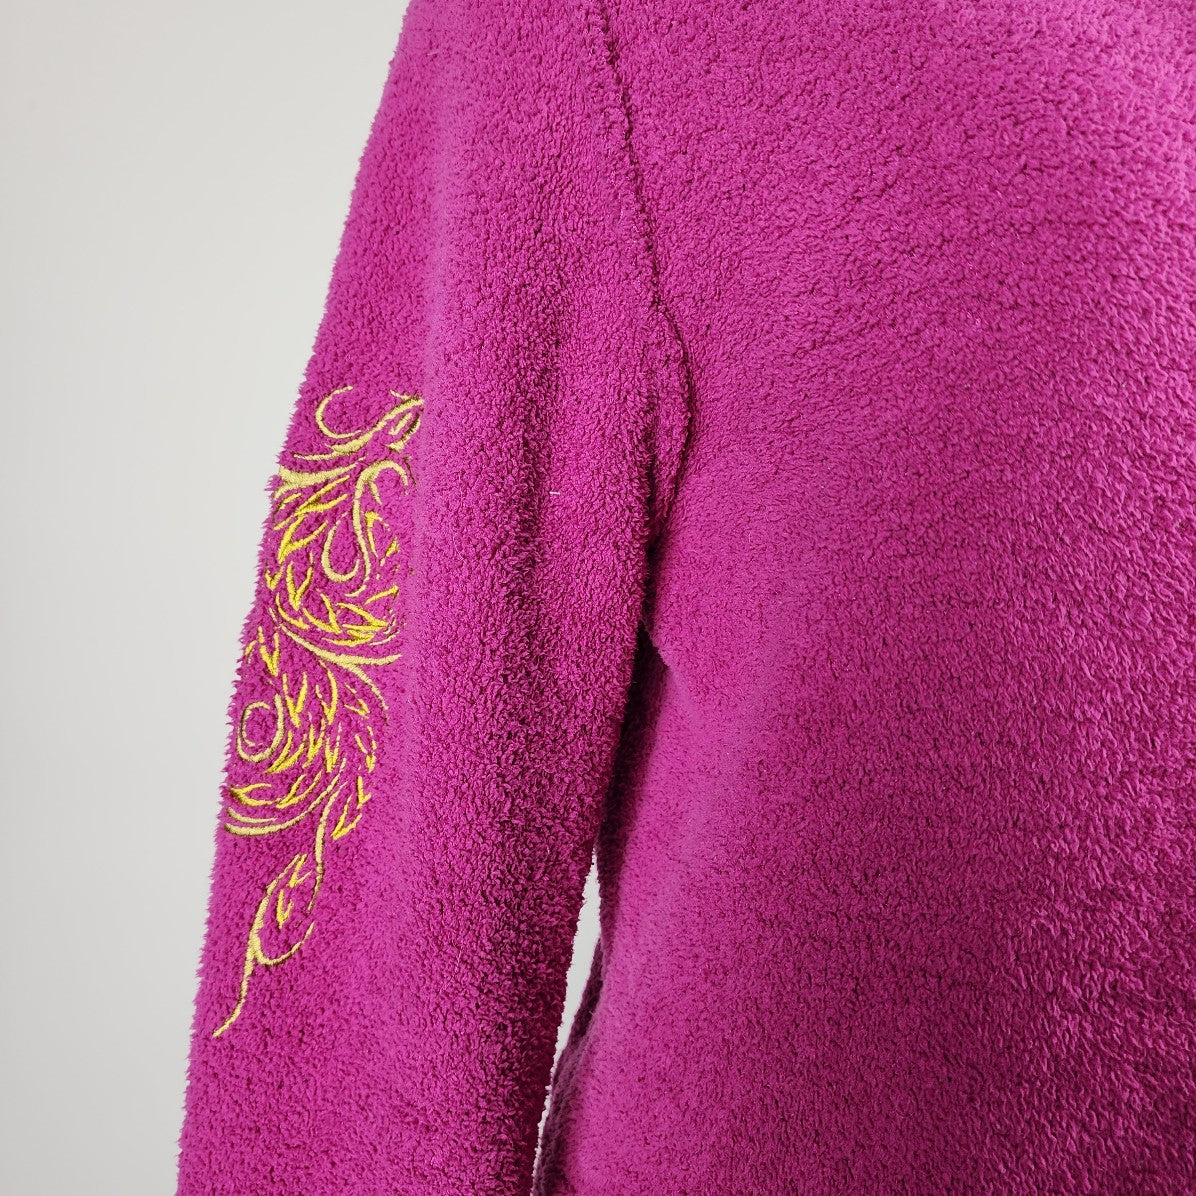 Julep Pink Zip Up Fuzzy Jacket Cardigan Size L/XL